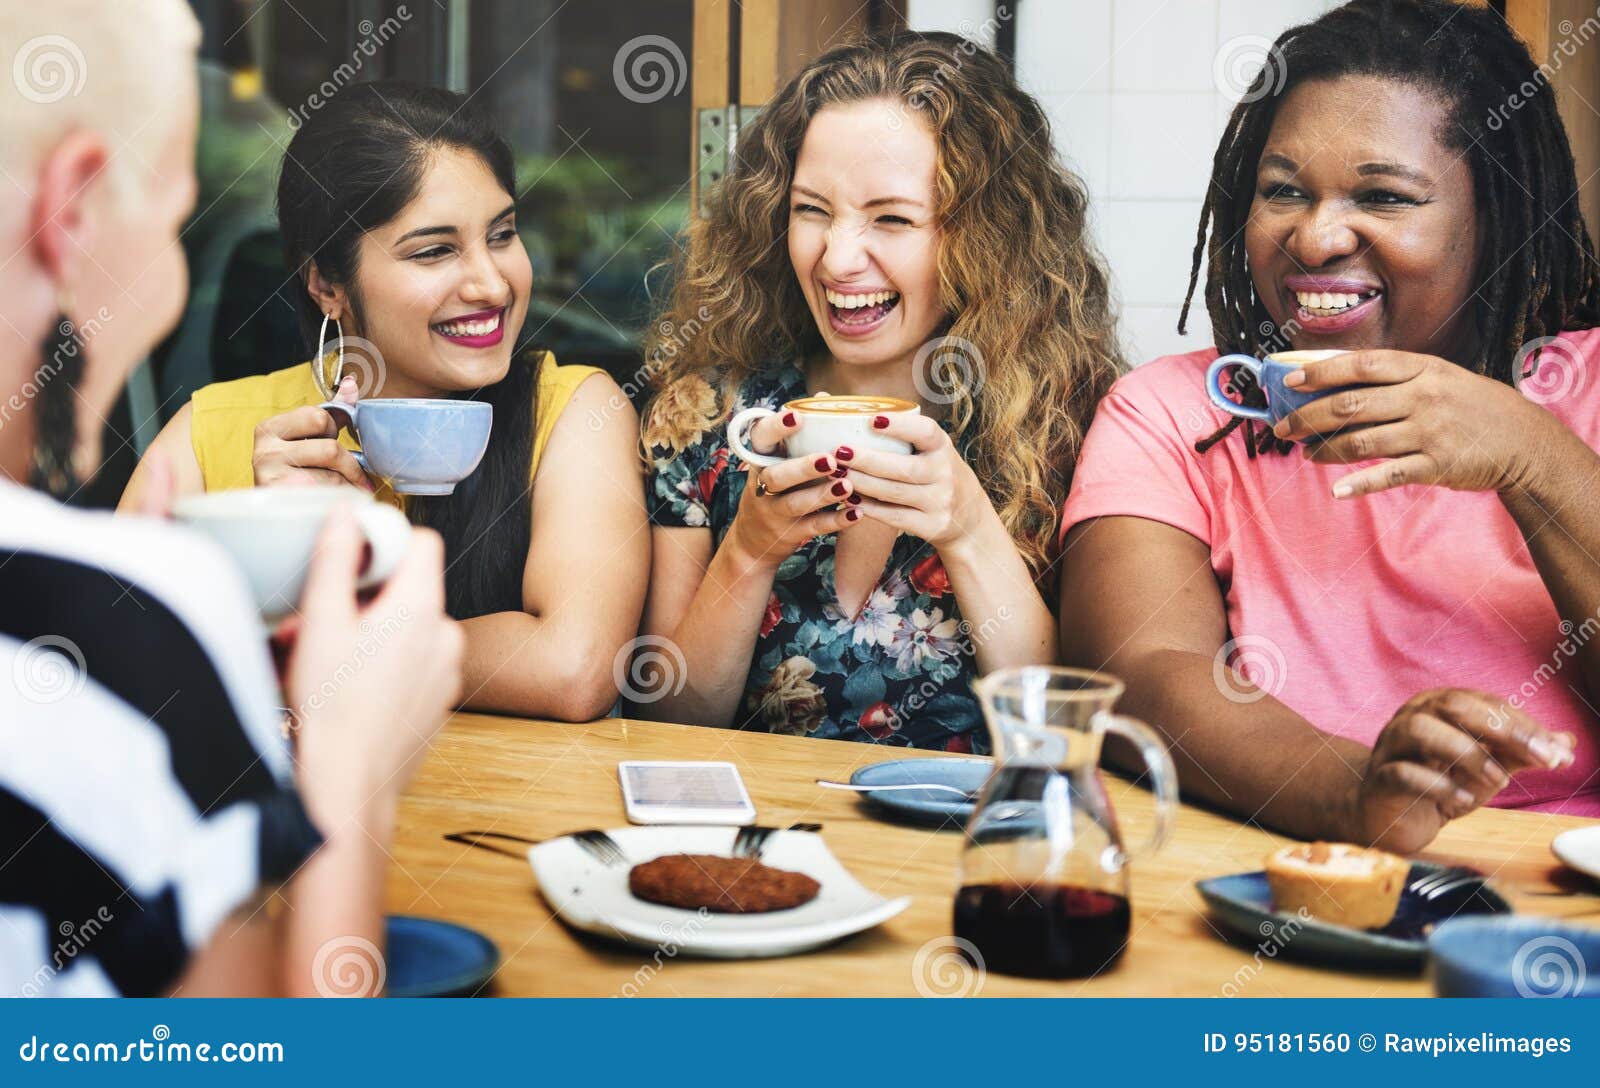 diversity women socialize unity together concept